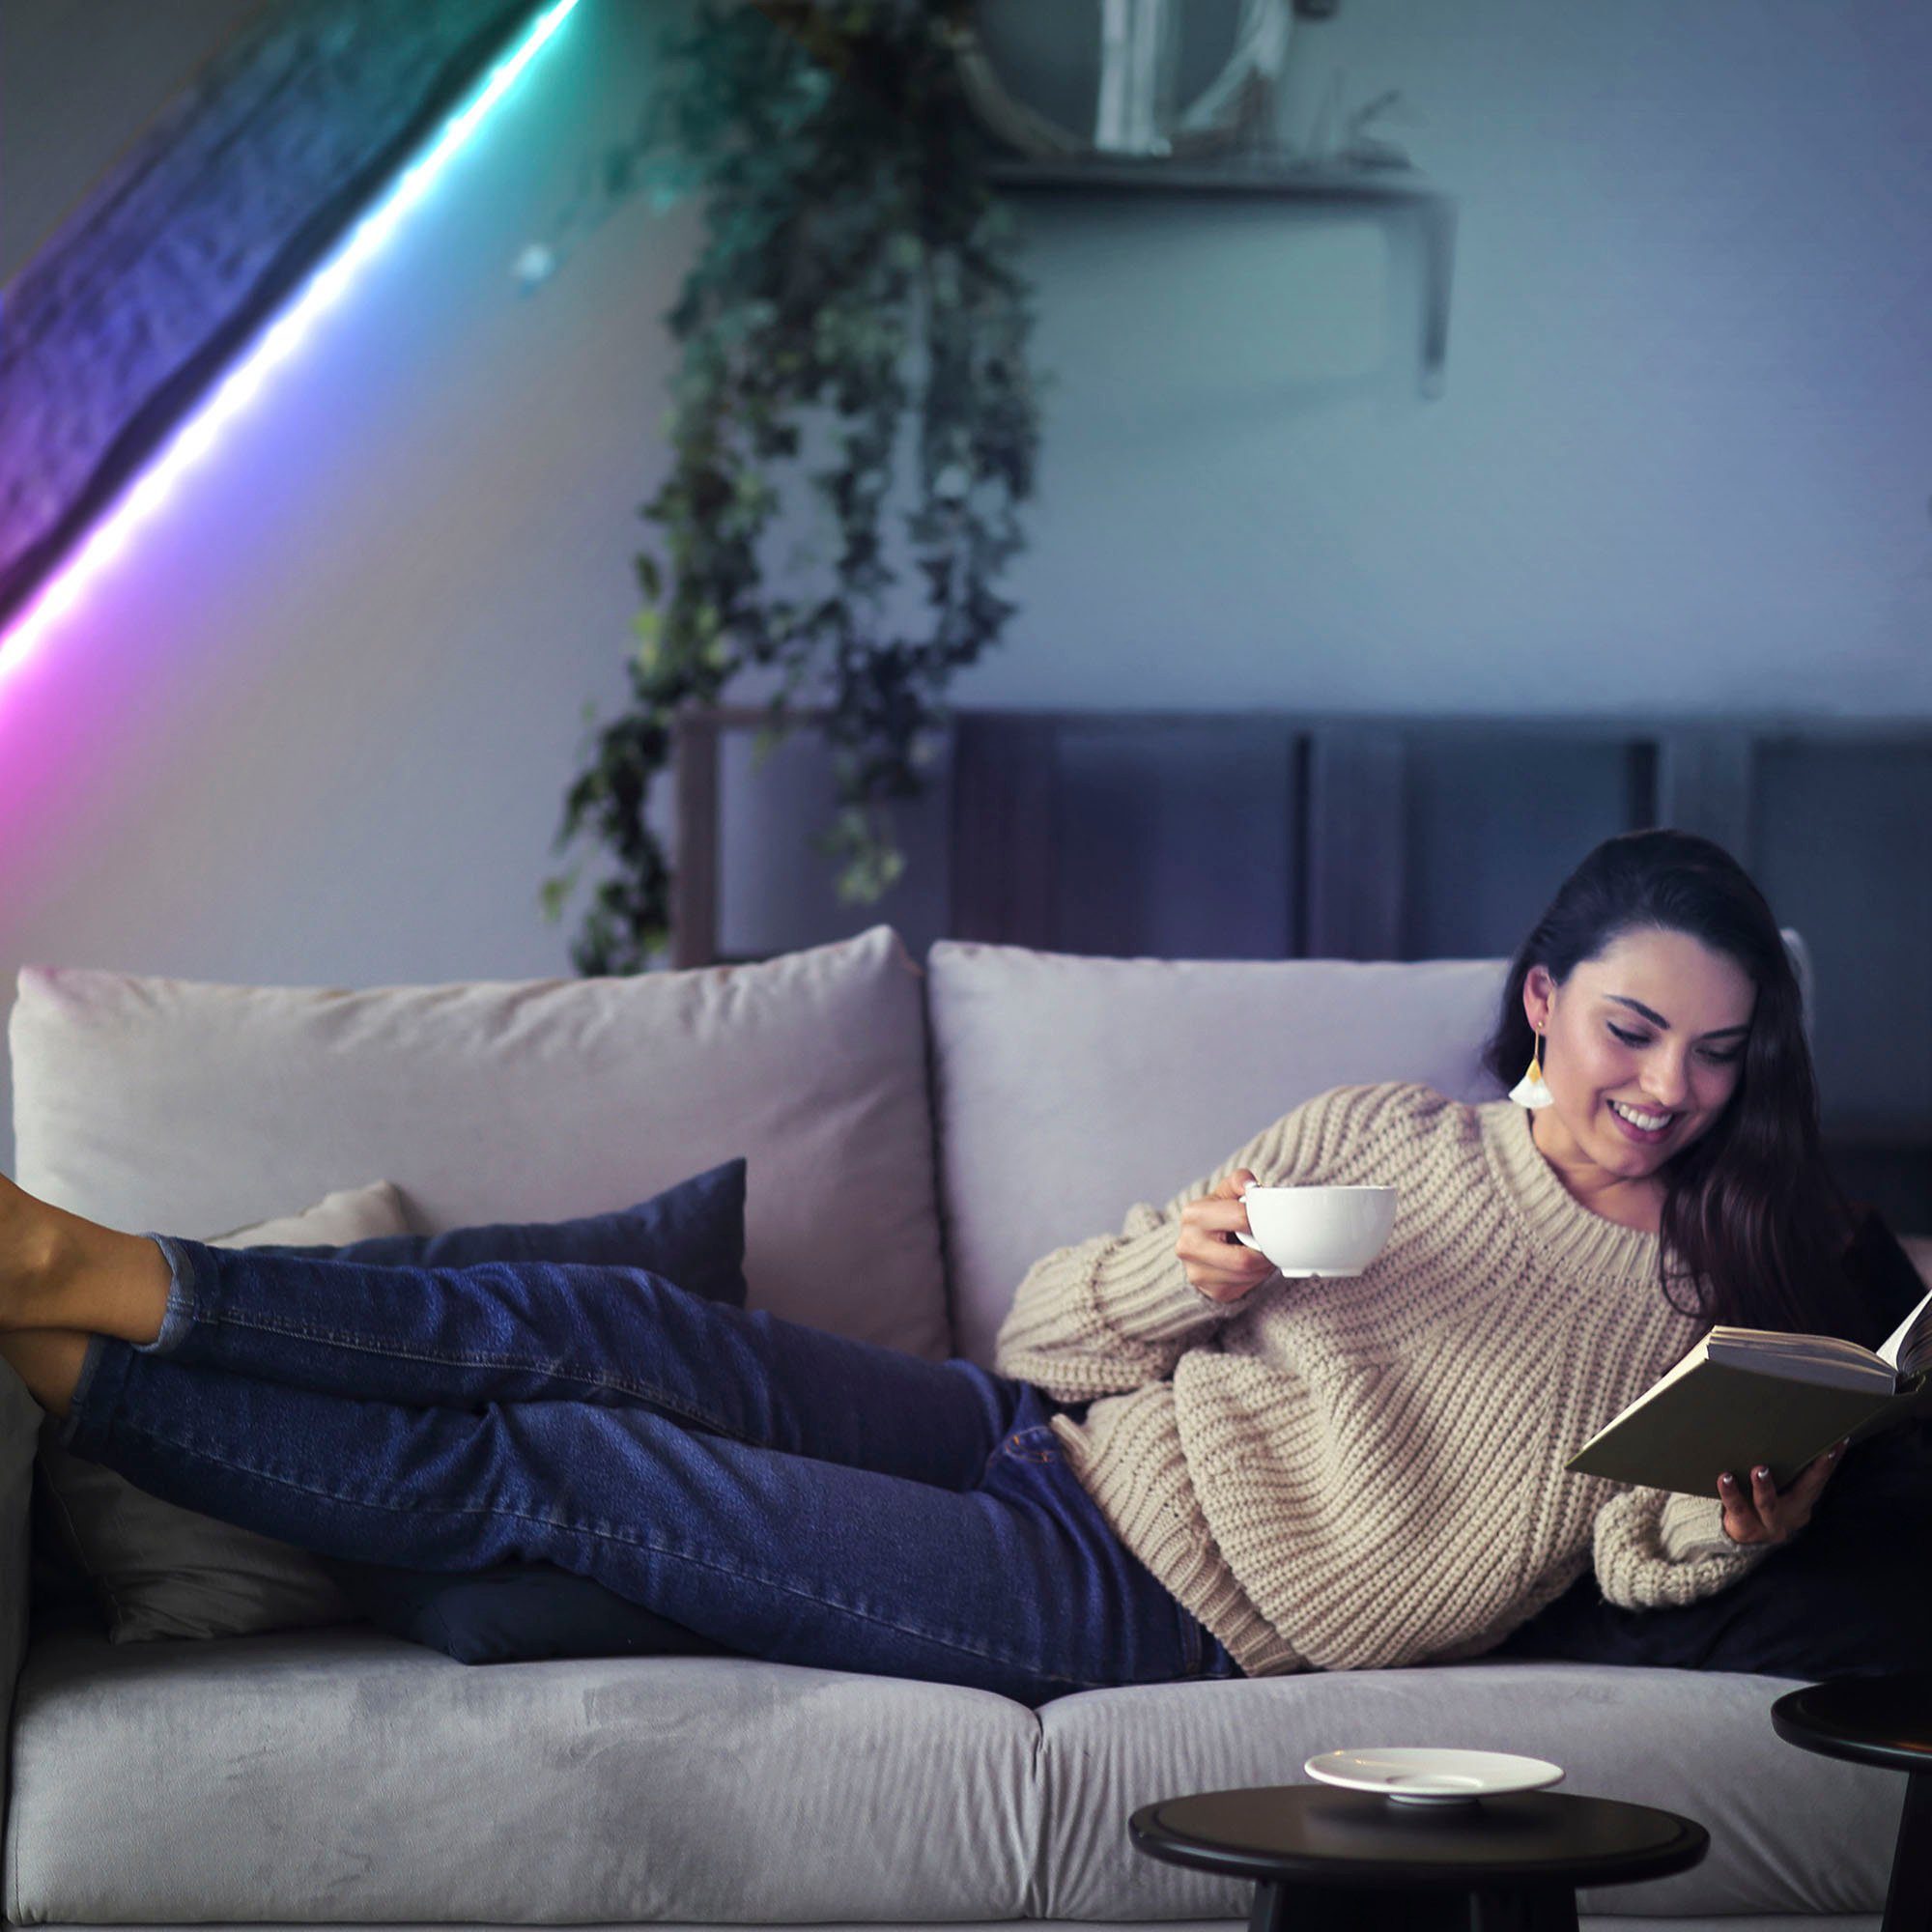 Lichtleiste, Selbstklebend Musiksensor, mit LED B.K.Licht smartes RGBIC, 150-flammig, Wifi Band, LED-Streifen